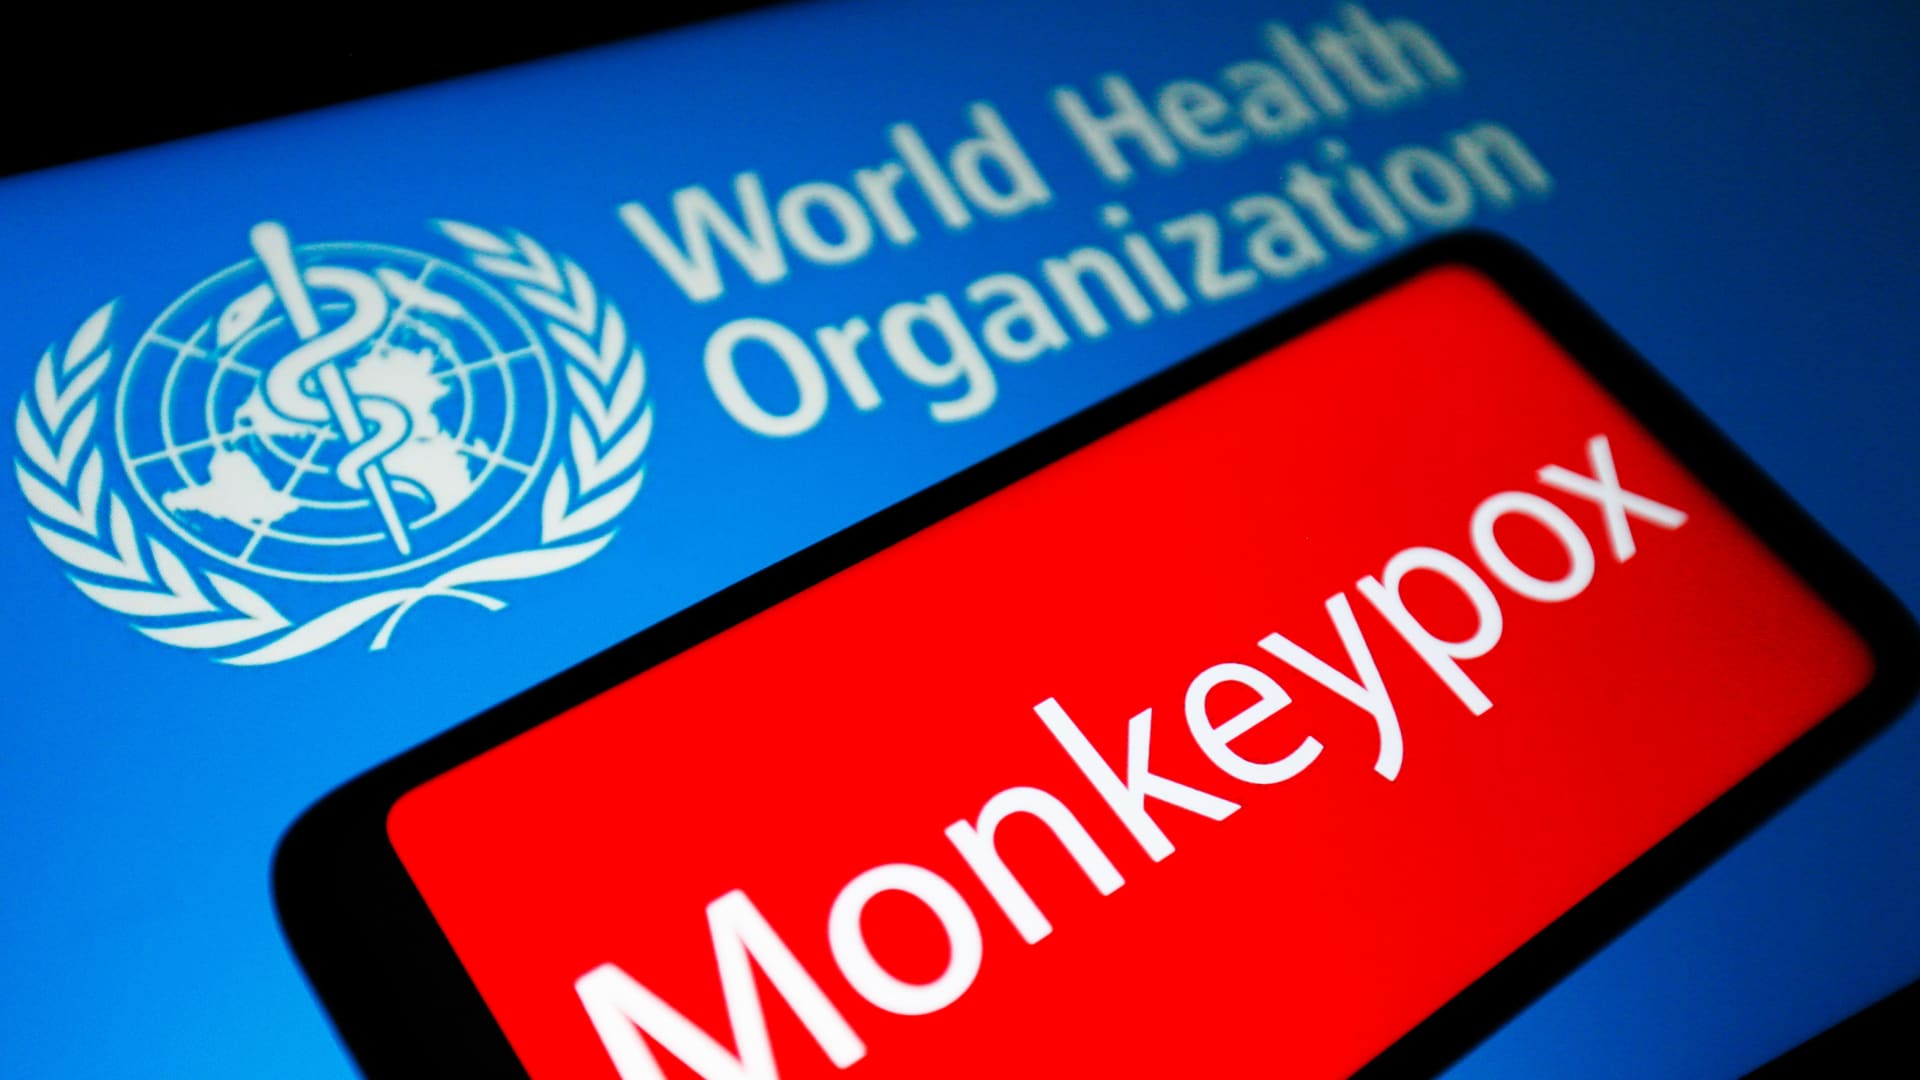 World Health Organization says monkeypox is not currently a global health emergency